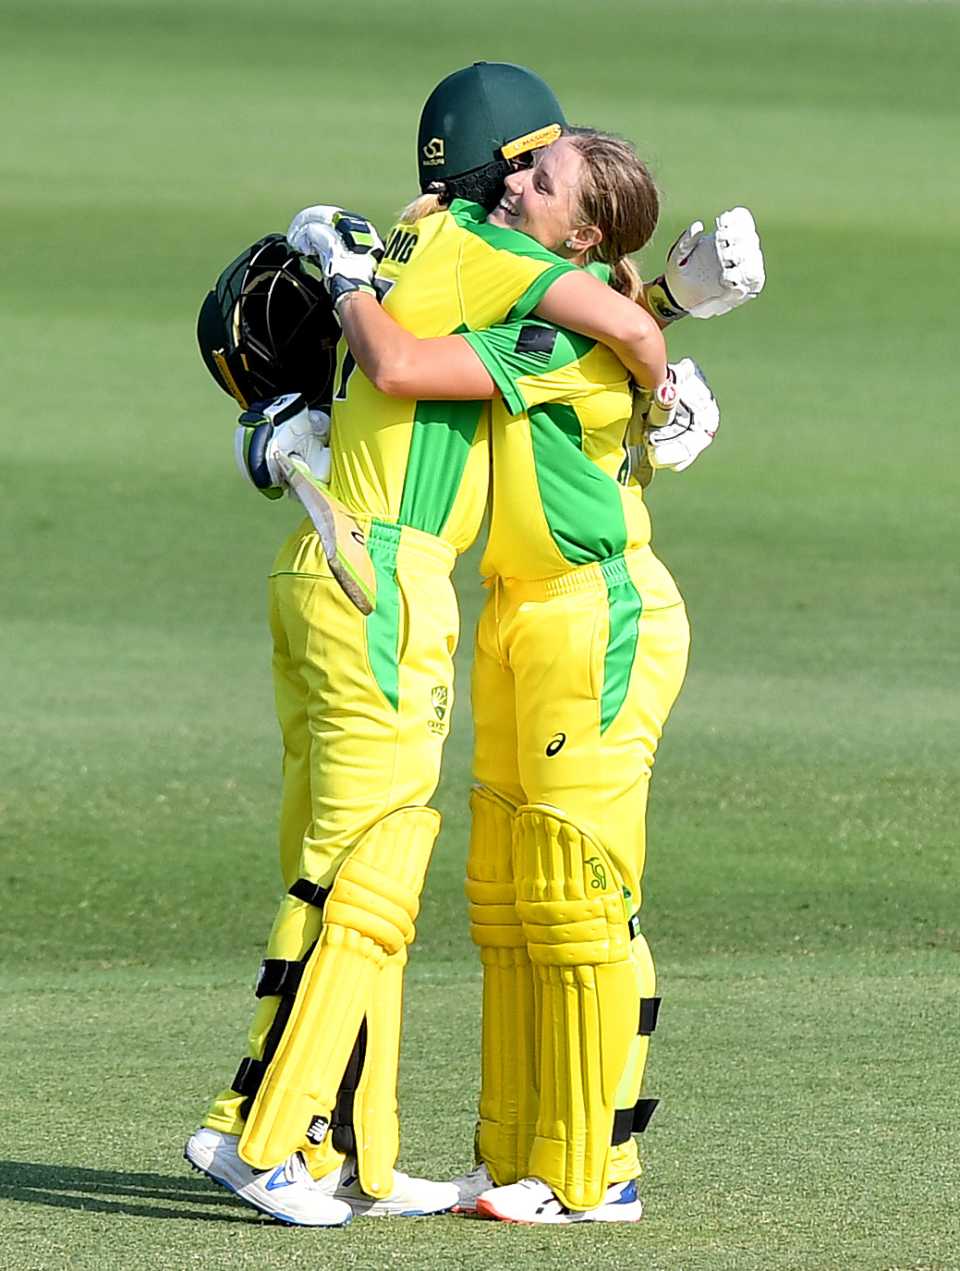 Alyssa Healy gets a hug from Meg Lanning after reaching her century, Australia Women v Sri Lanka Women, 3rd ODI, Brisbane, October 9, 2019